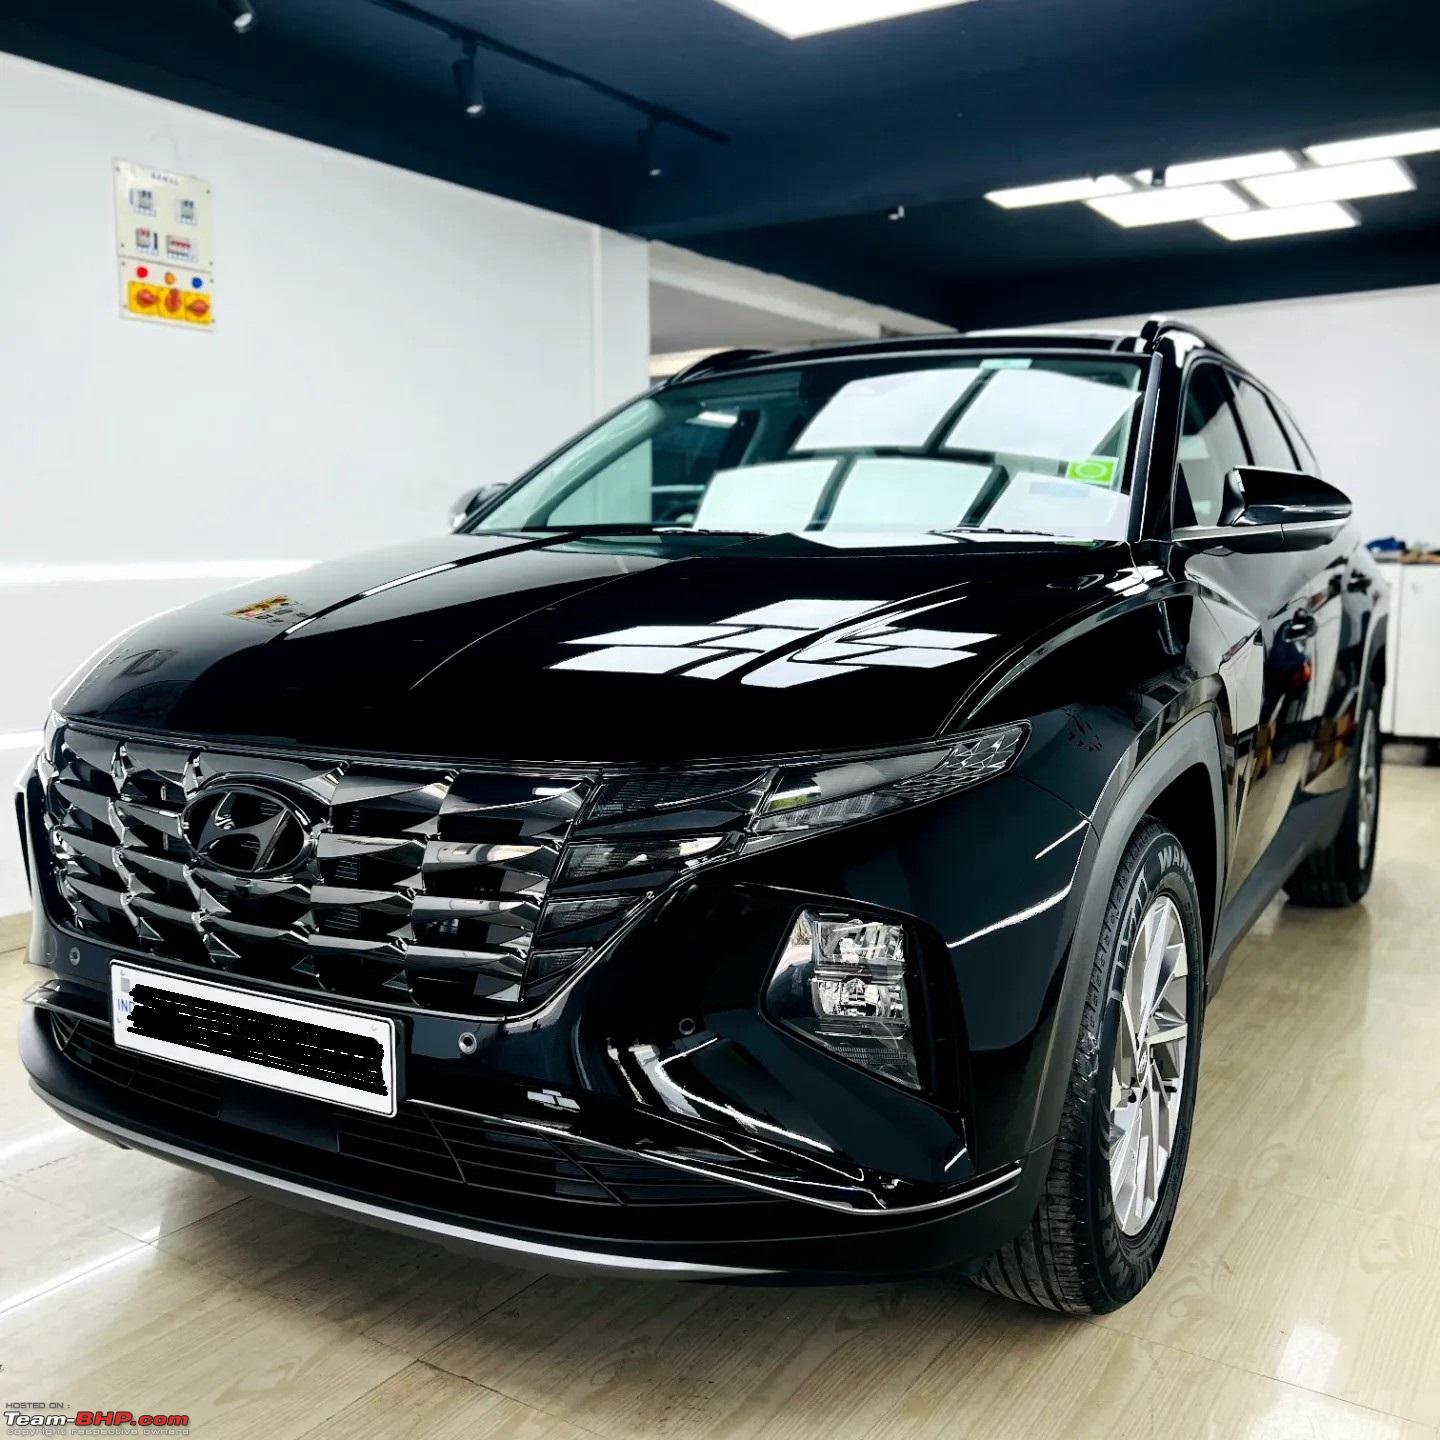 2022 Hyundai Tucson Review - Page 58 - Team-BHP